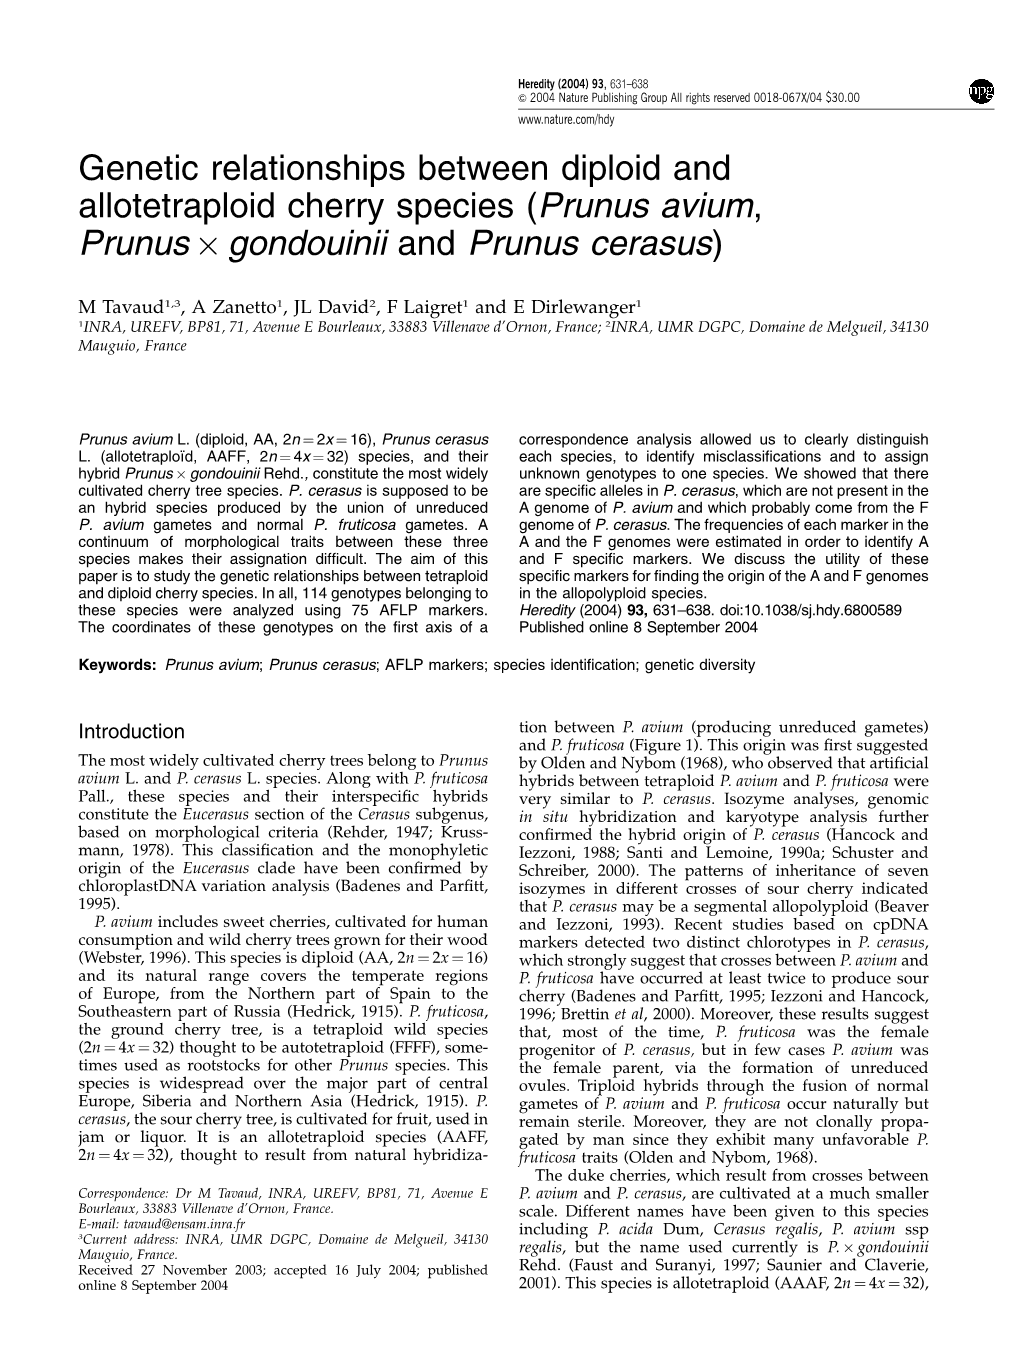 Genetic Relationships Between Diploid and Allotetraploid Cherry Species (Prunus Avium, Prunus Â Gondouinii and Prunus Cerasus)